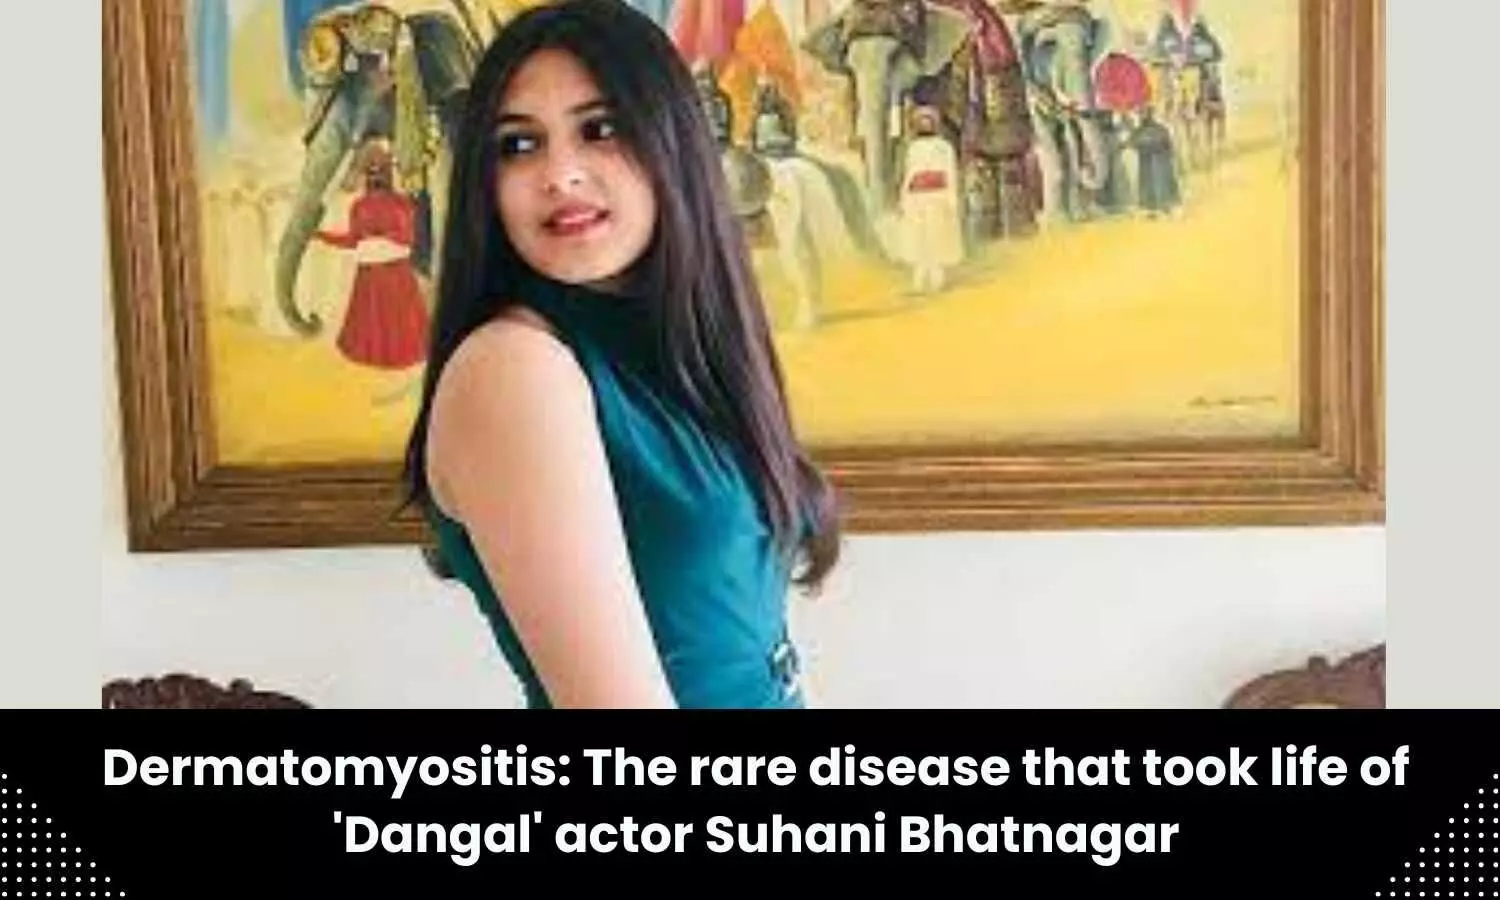 Dangal actor Suhani Bhatnagar dies of rare disease called Dermatomyositis